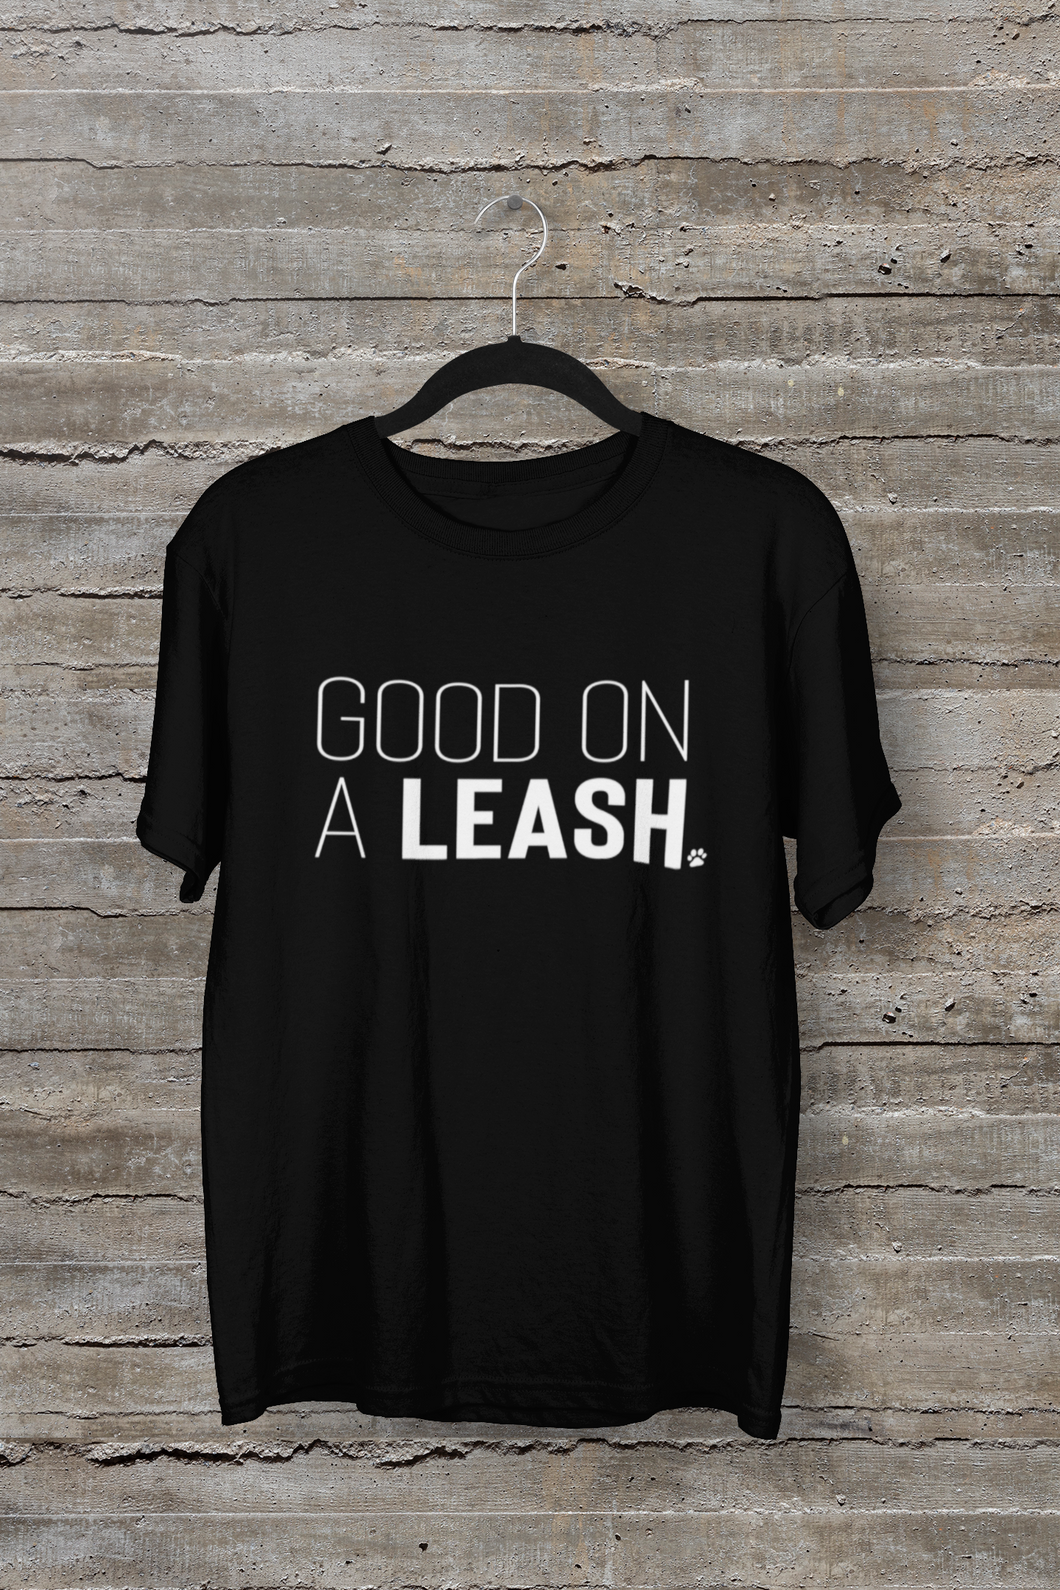 Good On A Leash Men's/Unisex or Women's T-shirt